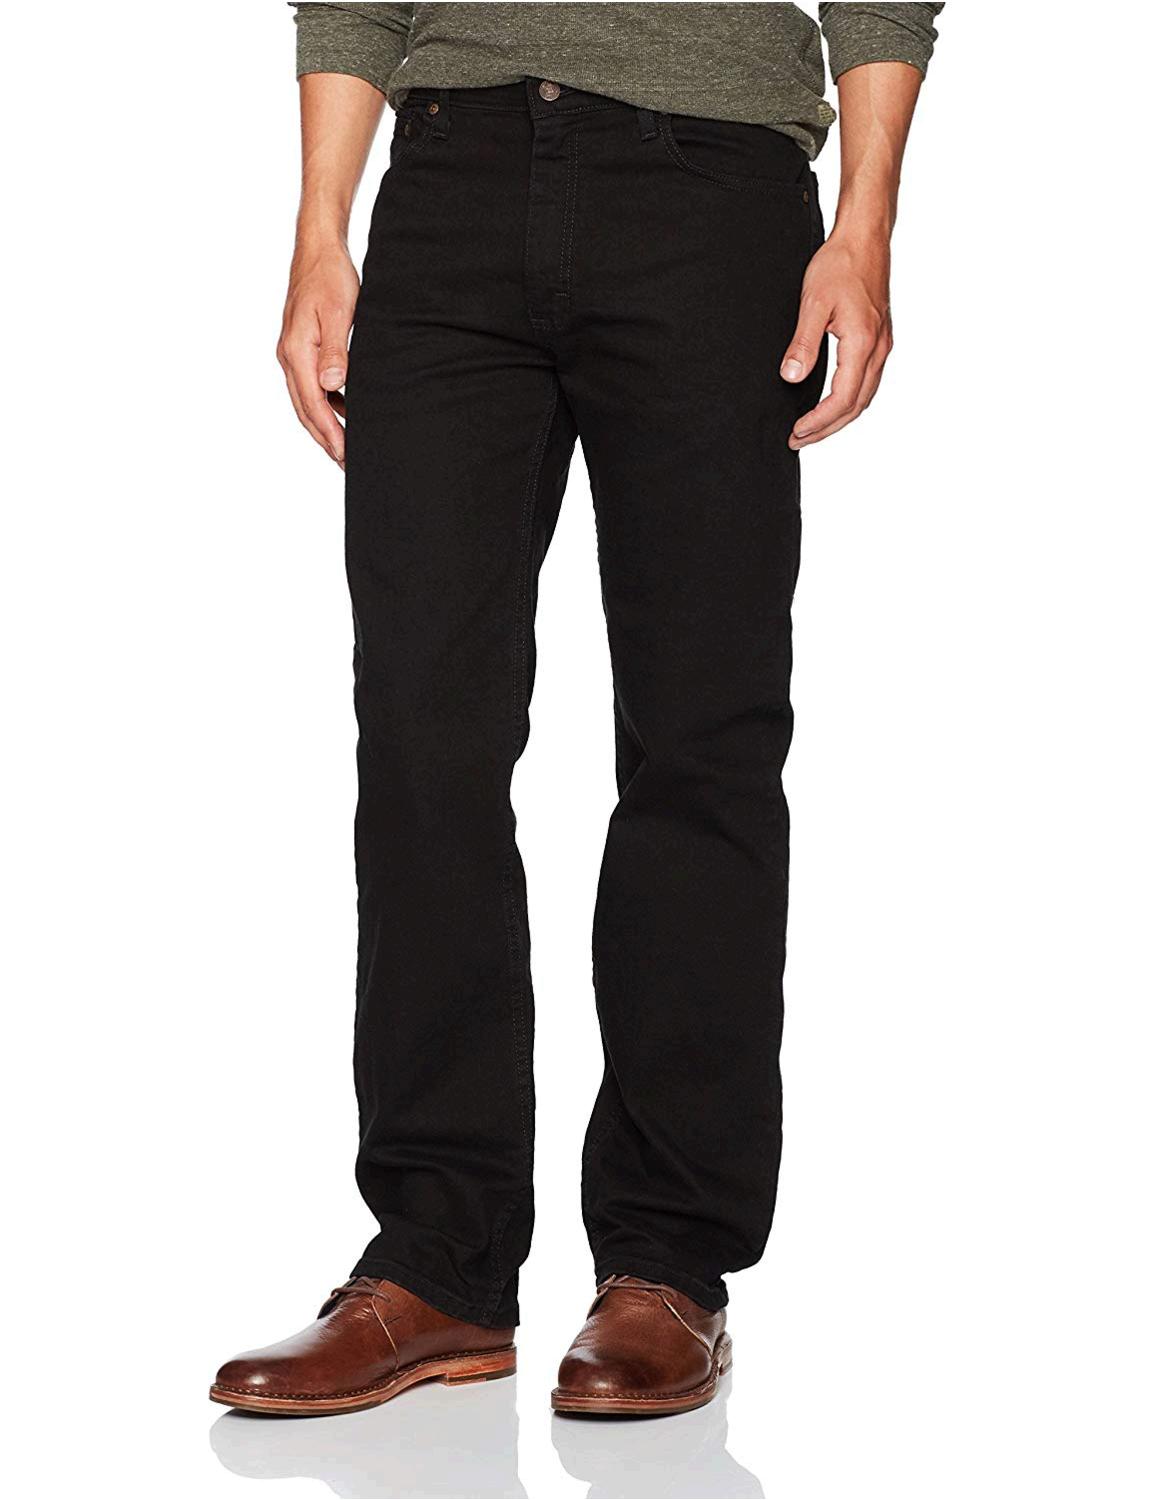 Wrangler Men’s Regular Fit Comfort Flex Waist Jean,, Black, Size 35W x ...